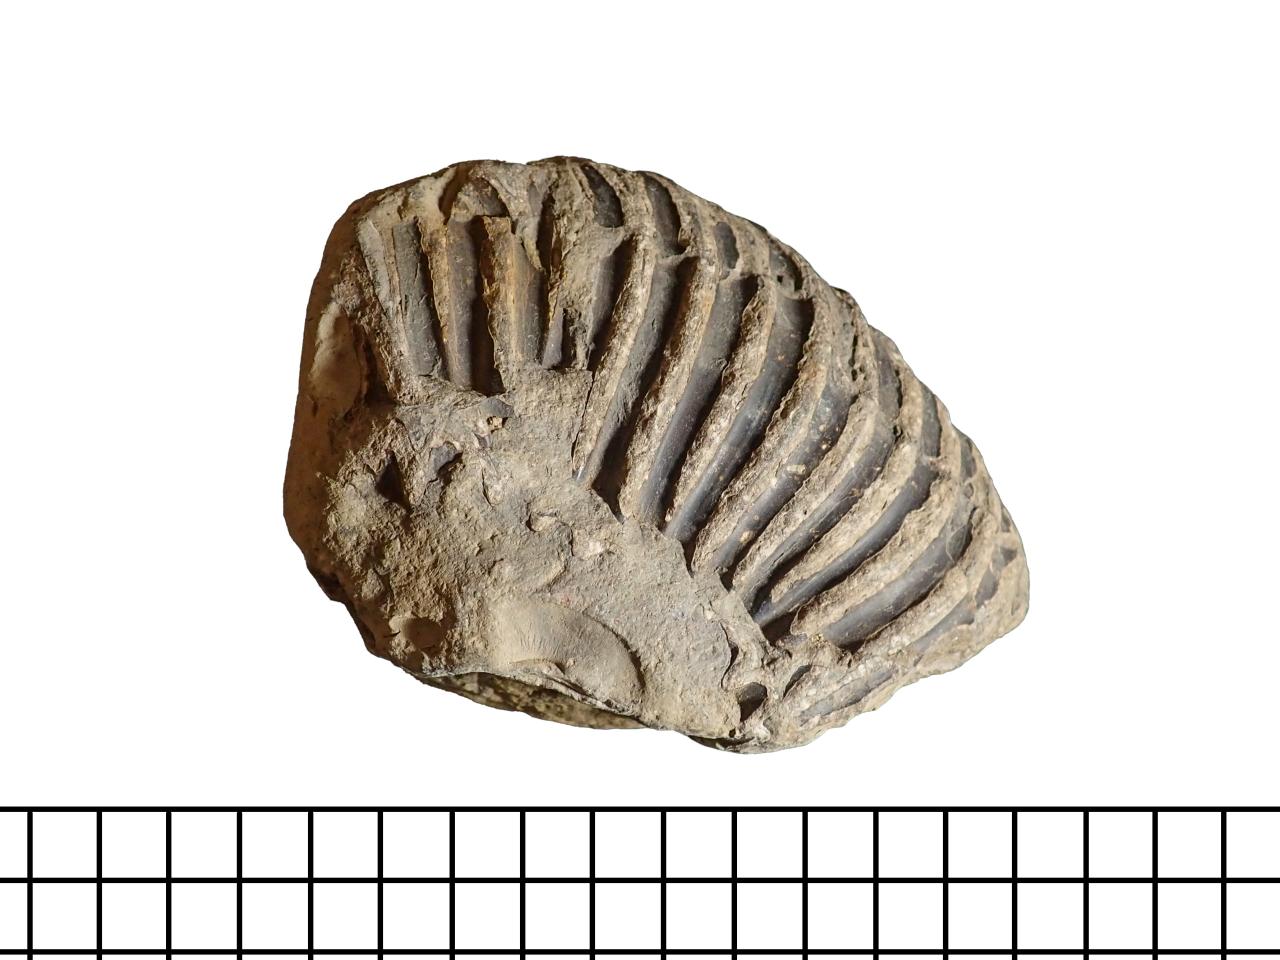 Fragmento de ammonite aff. Favrella sp